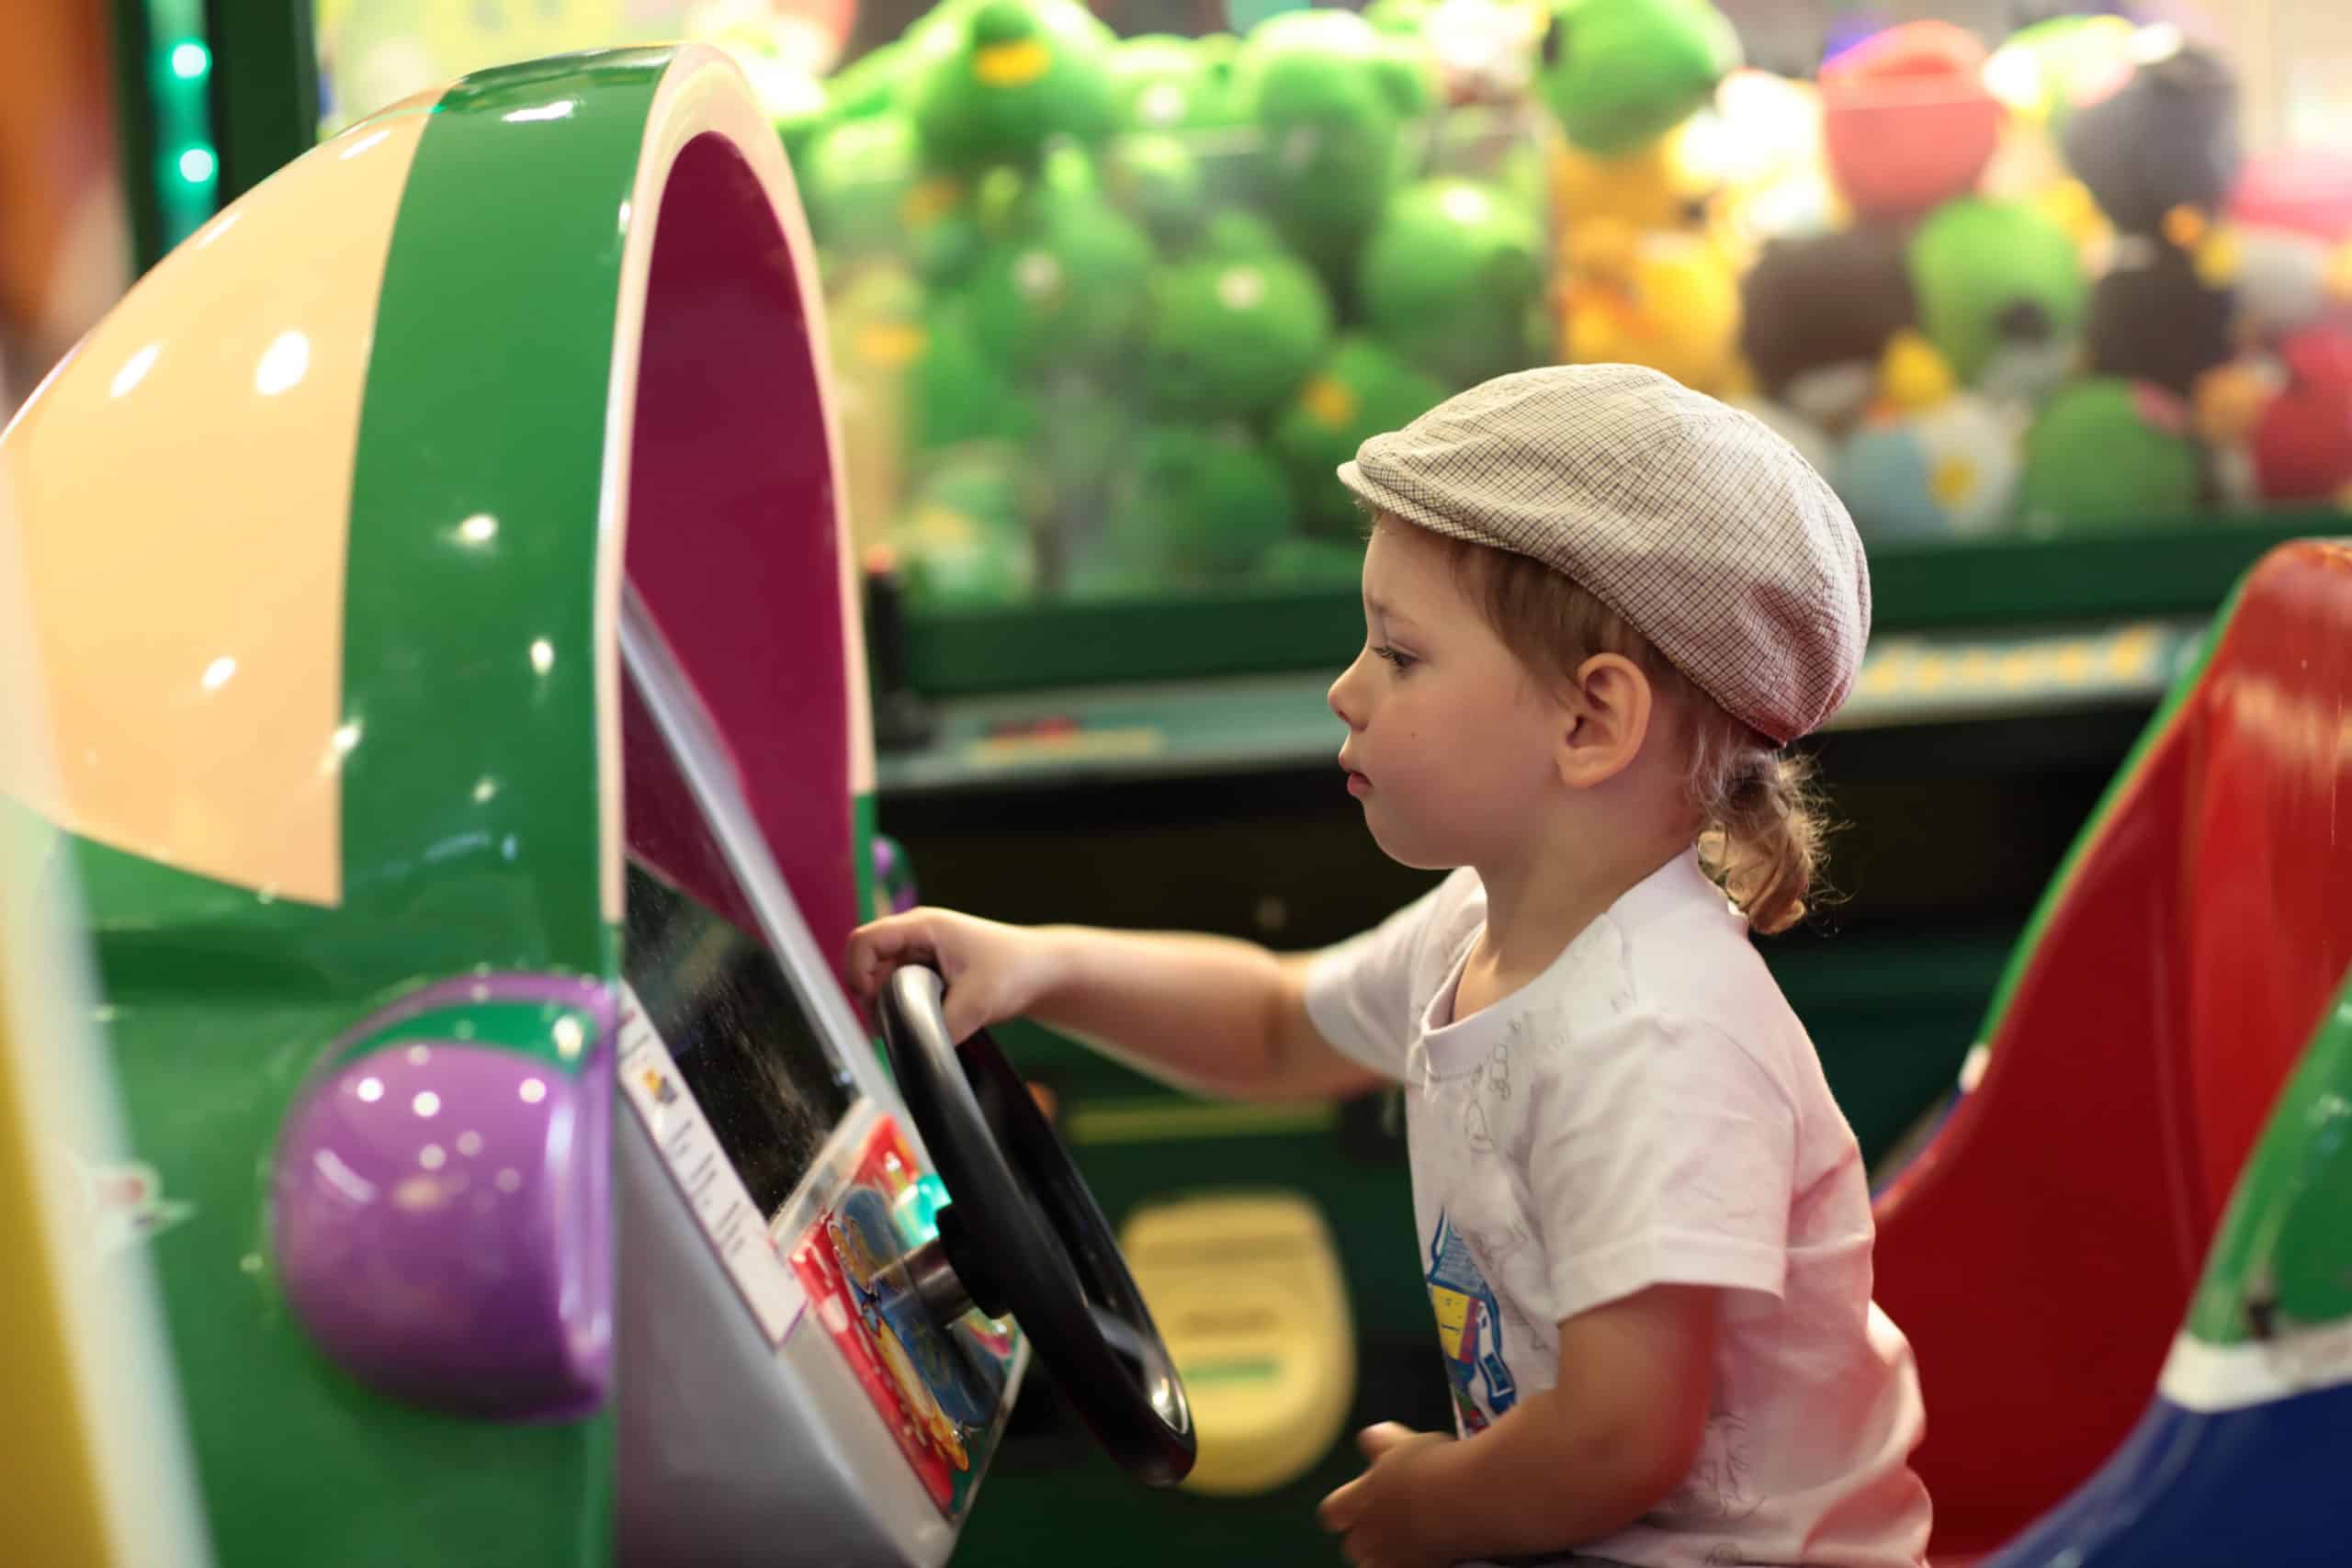 Boy playing arcade game machine at an amusement park